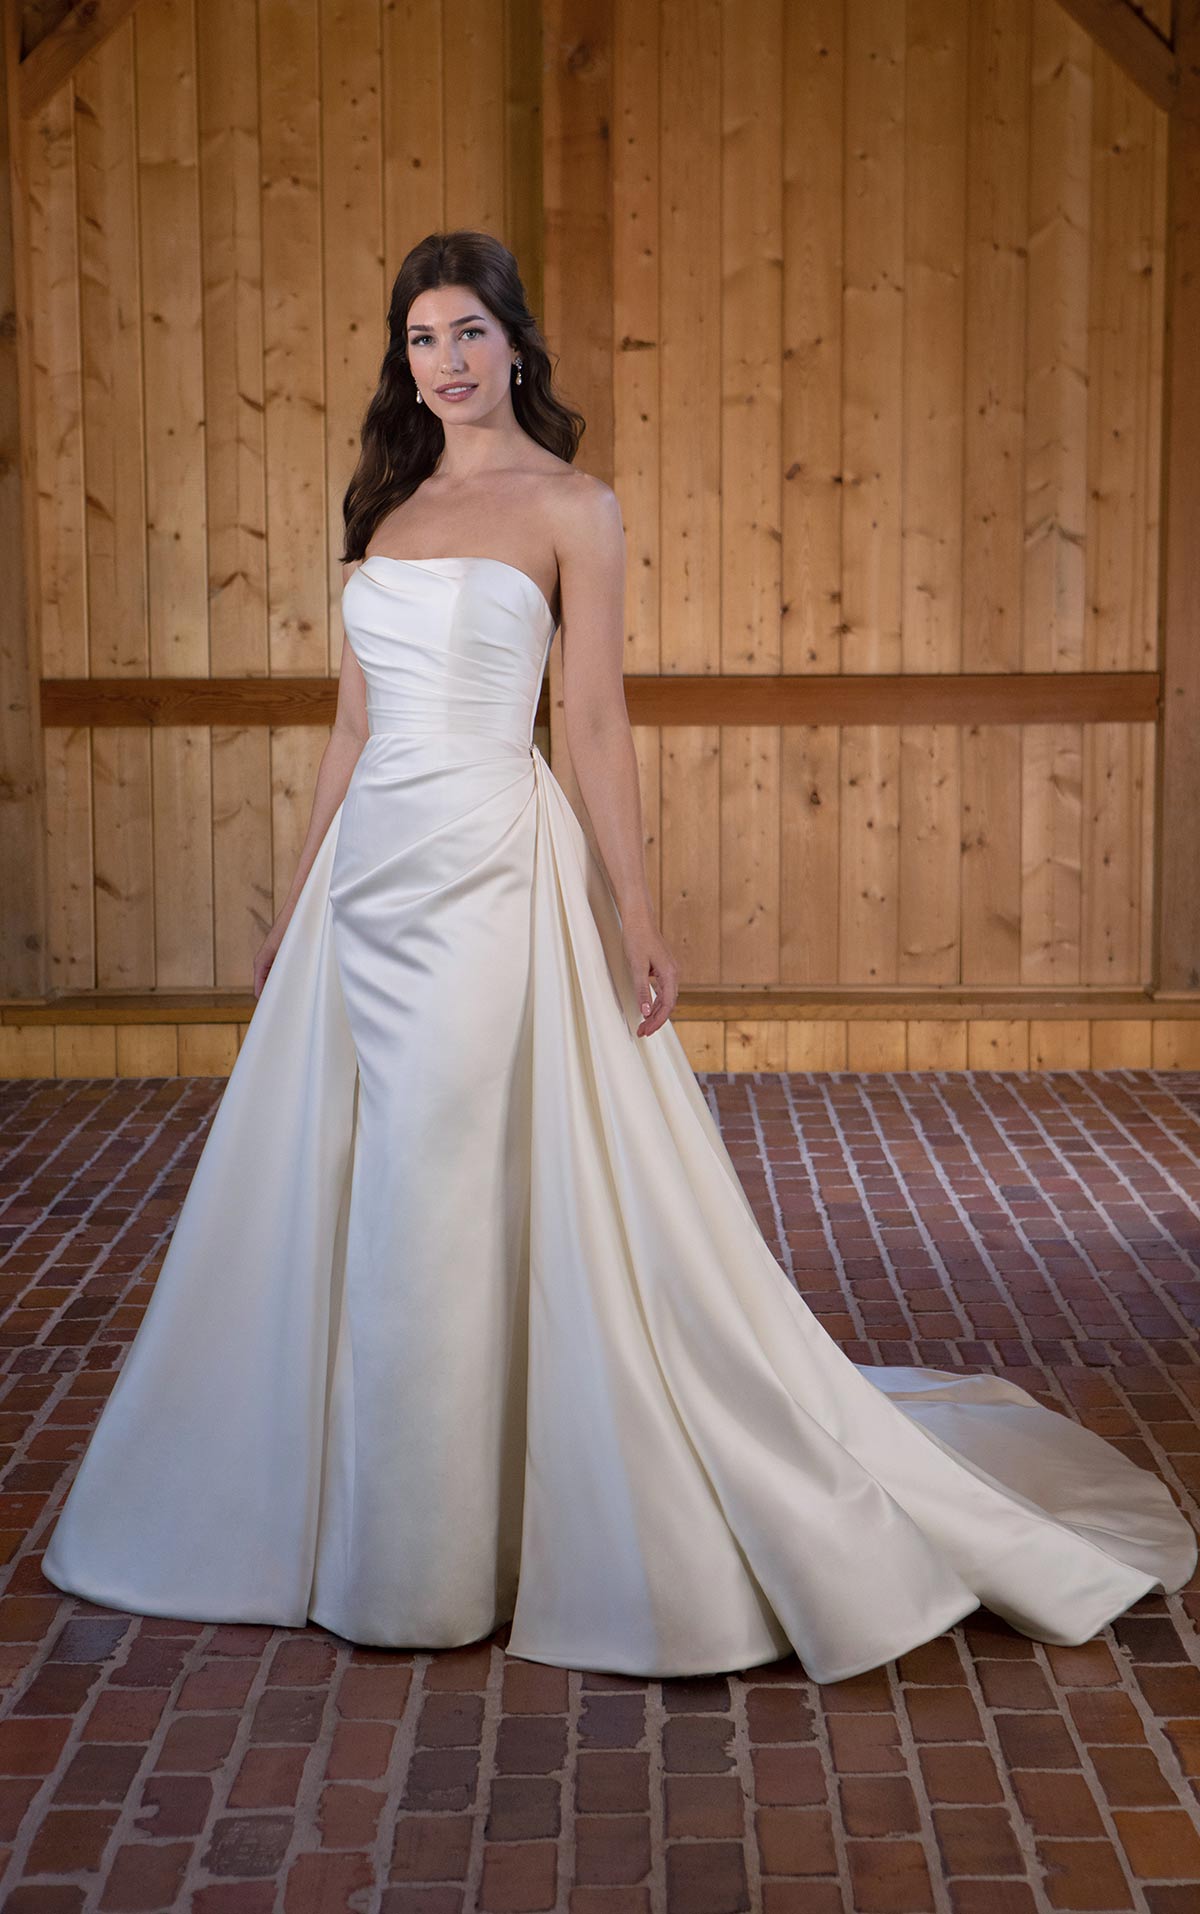 detachable wedding dress with overskirt - off the rack wedding dress